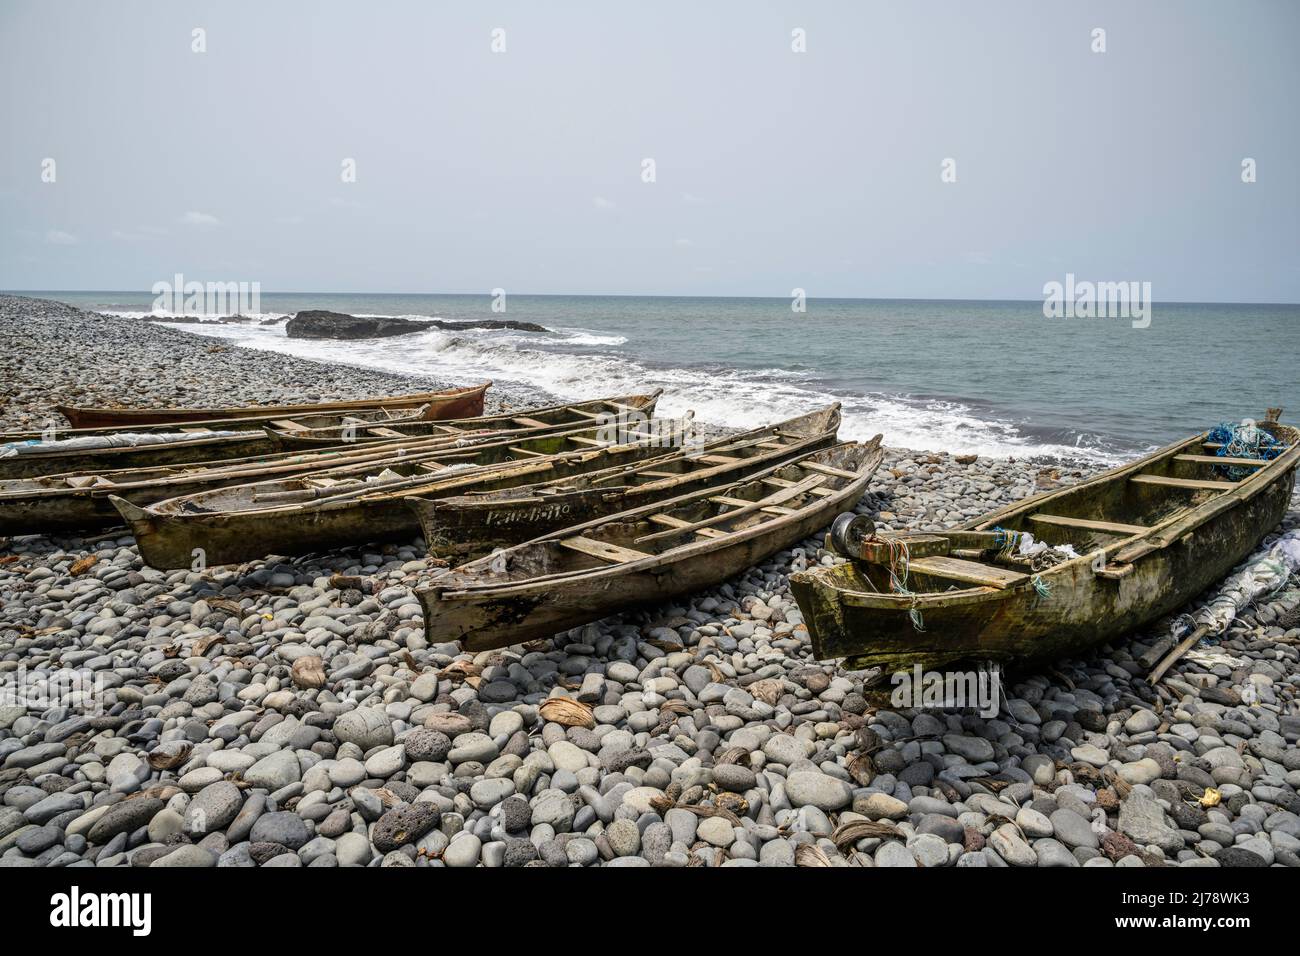 Fishing boats on a rocky beach. Stock Photo